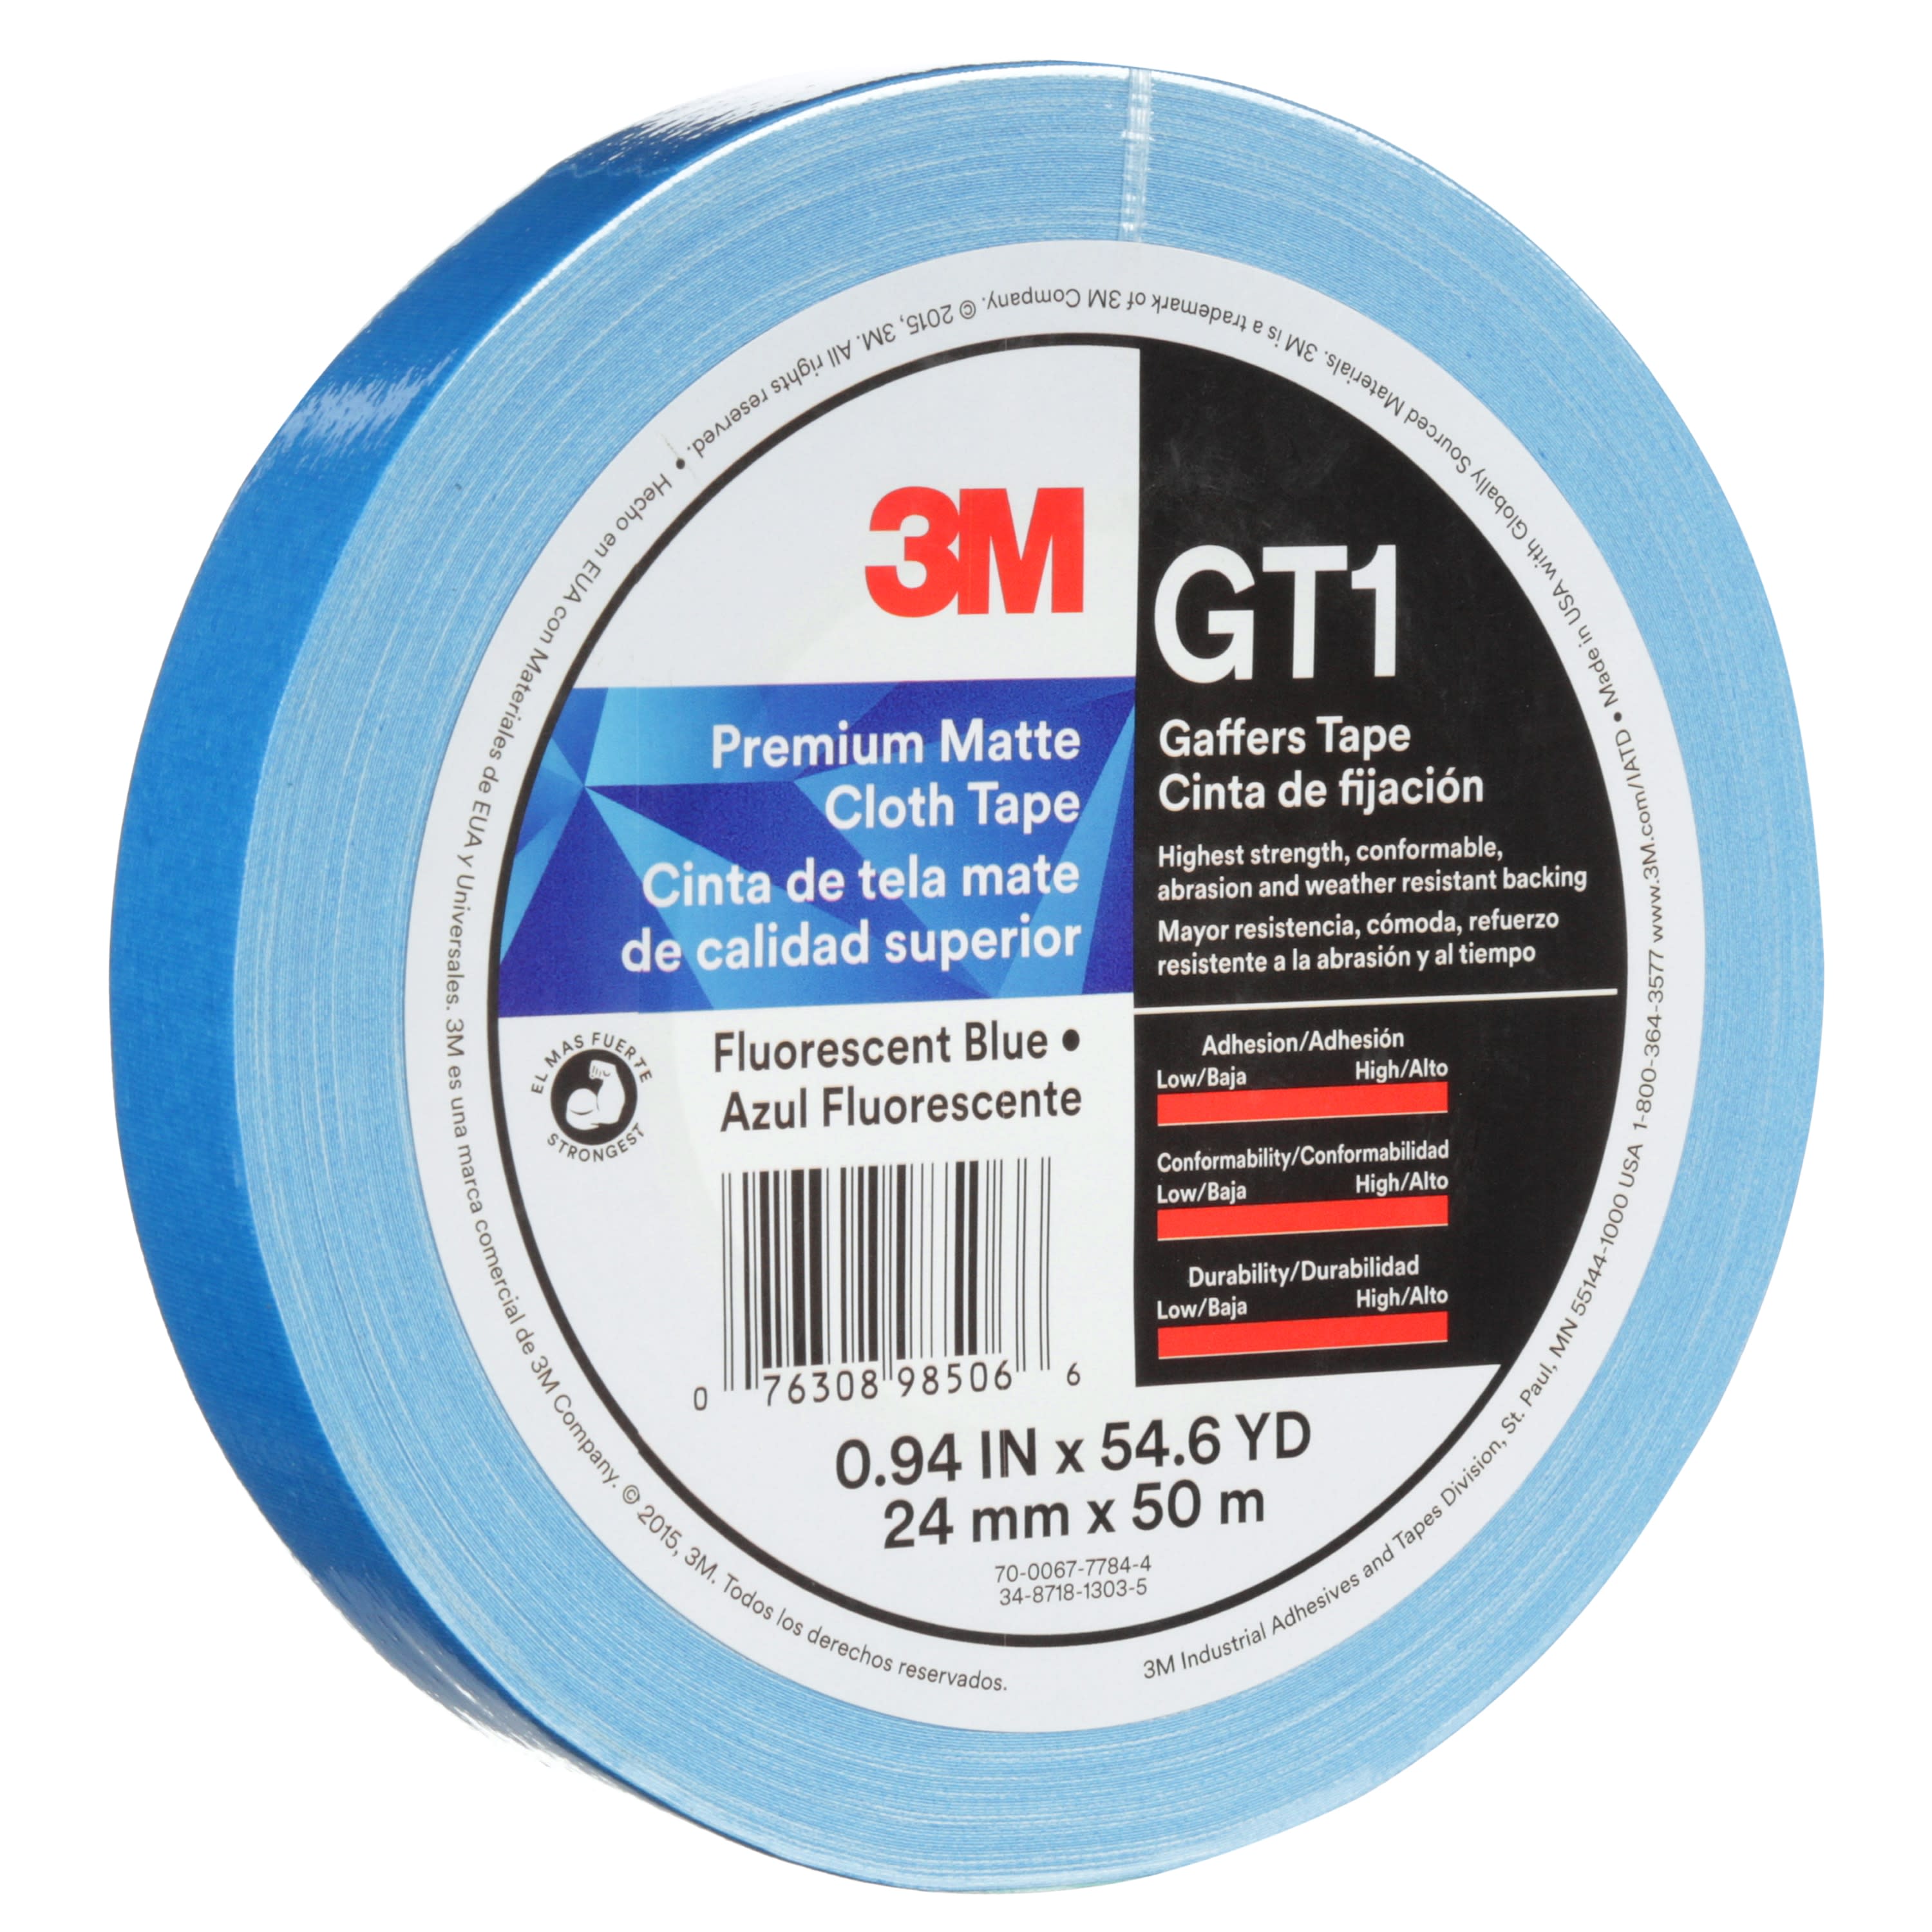 3M™ Premium Matte Cloth (Gaffers) Tape GT1, Fluorescent Blue, 24 mm x 50
m, 11 mil, 48 per case